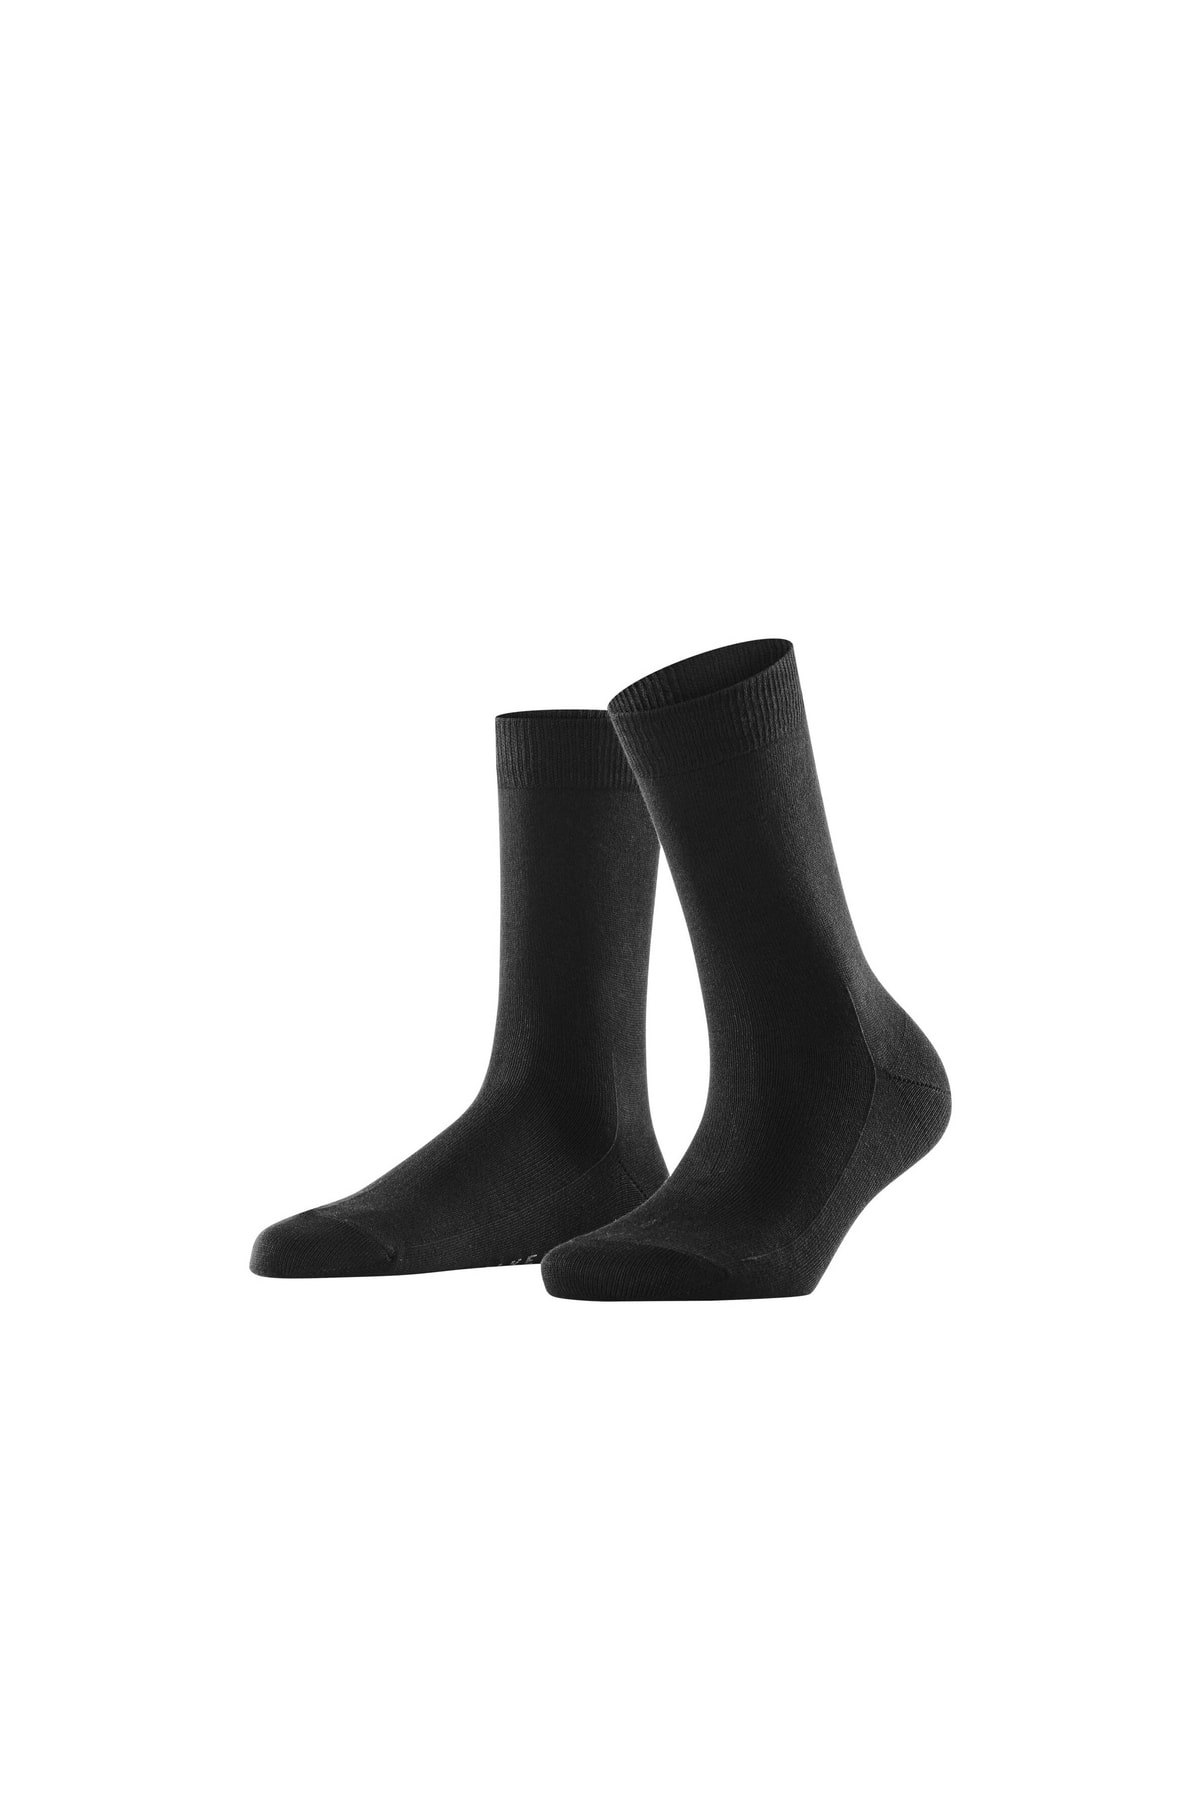 FALKE Socken Schwarz Casual für Damen – 39-42